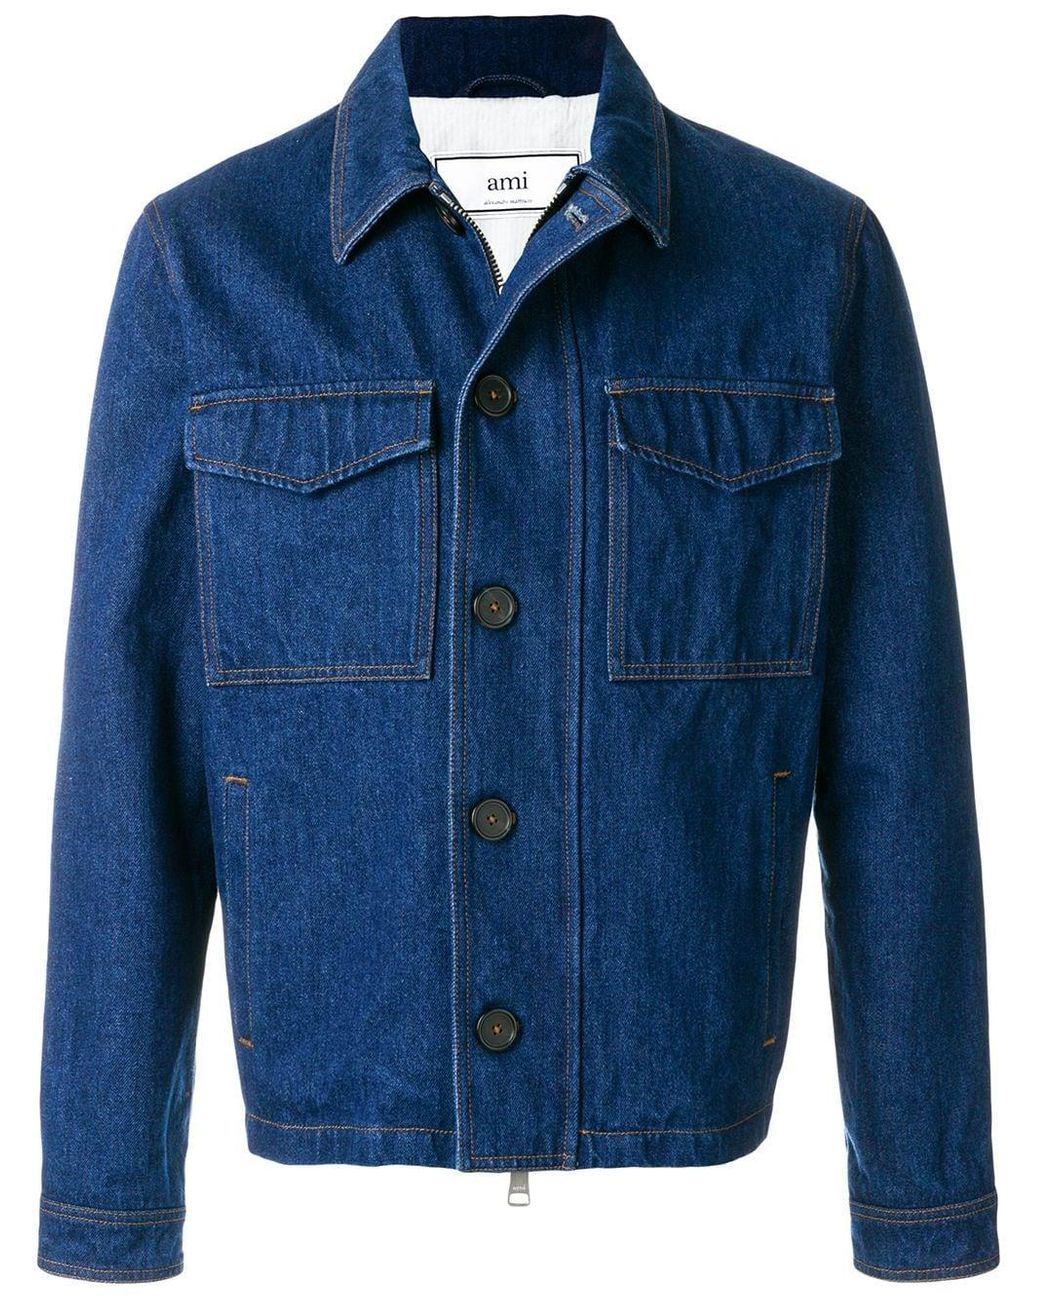 AMI Zipped Denim Jacket in Blue for Men - Lyst